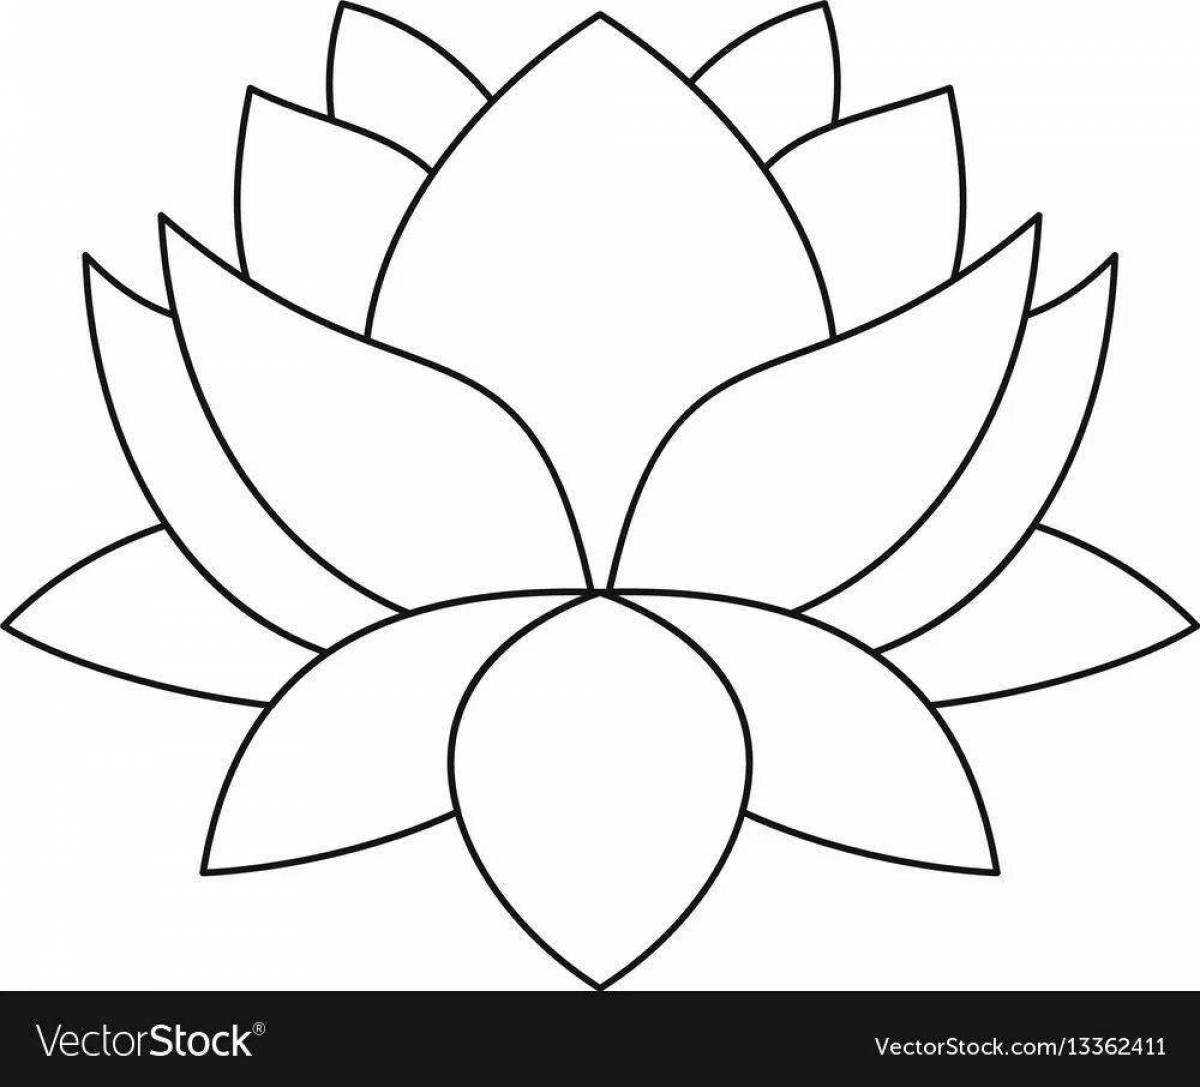 Tempting coloring lotus flower